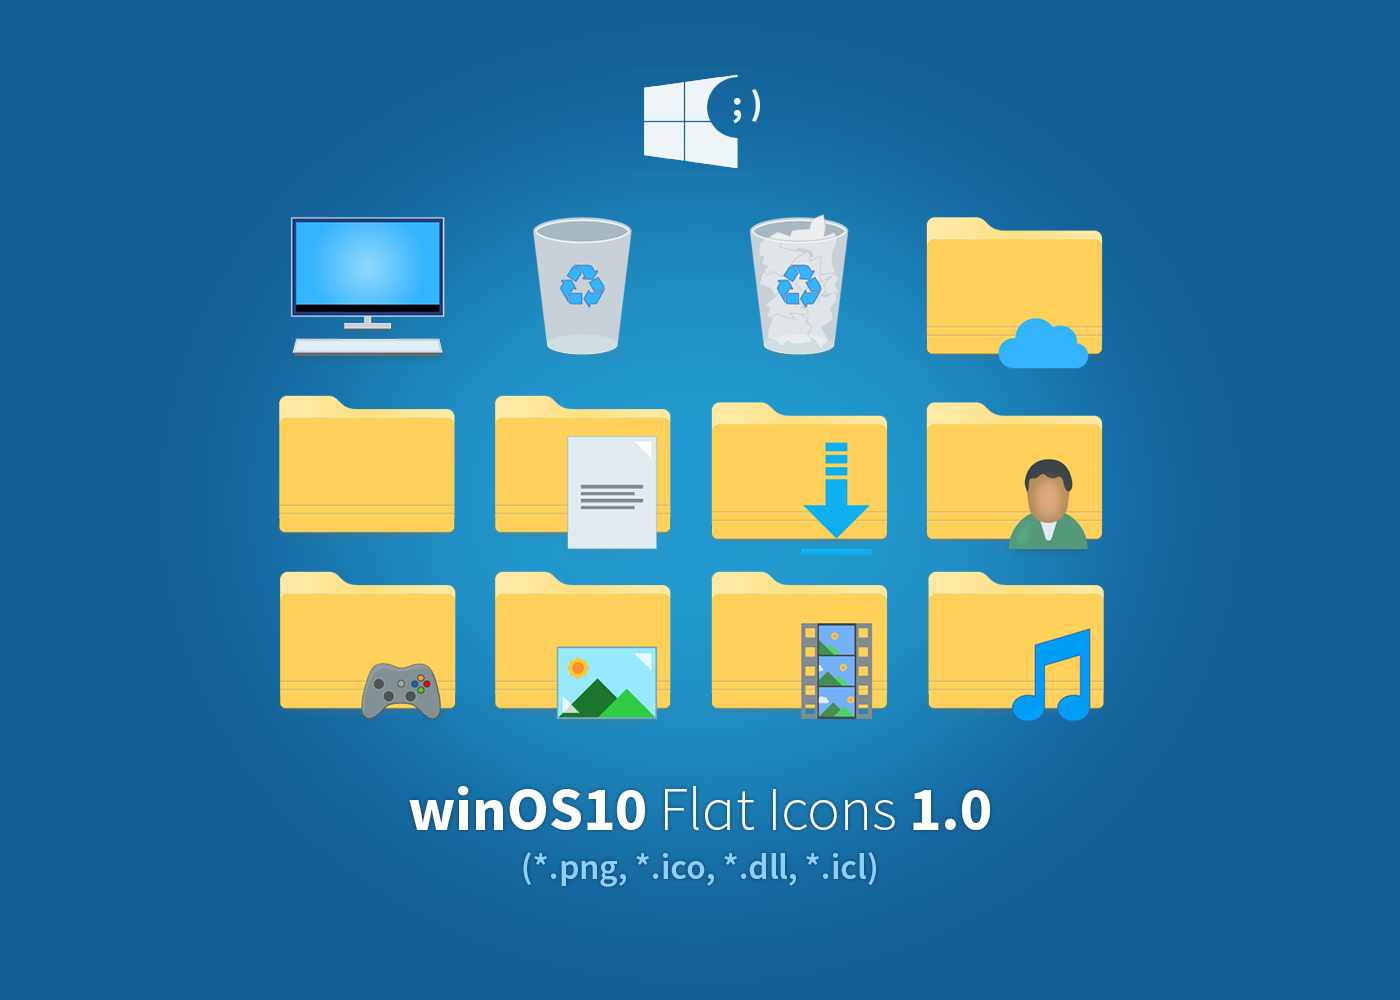 winOS10-Flat-v1 by pl-creative on DeviantArt